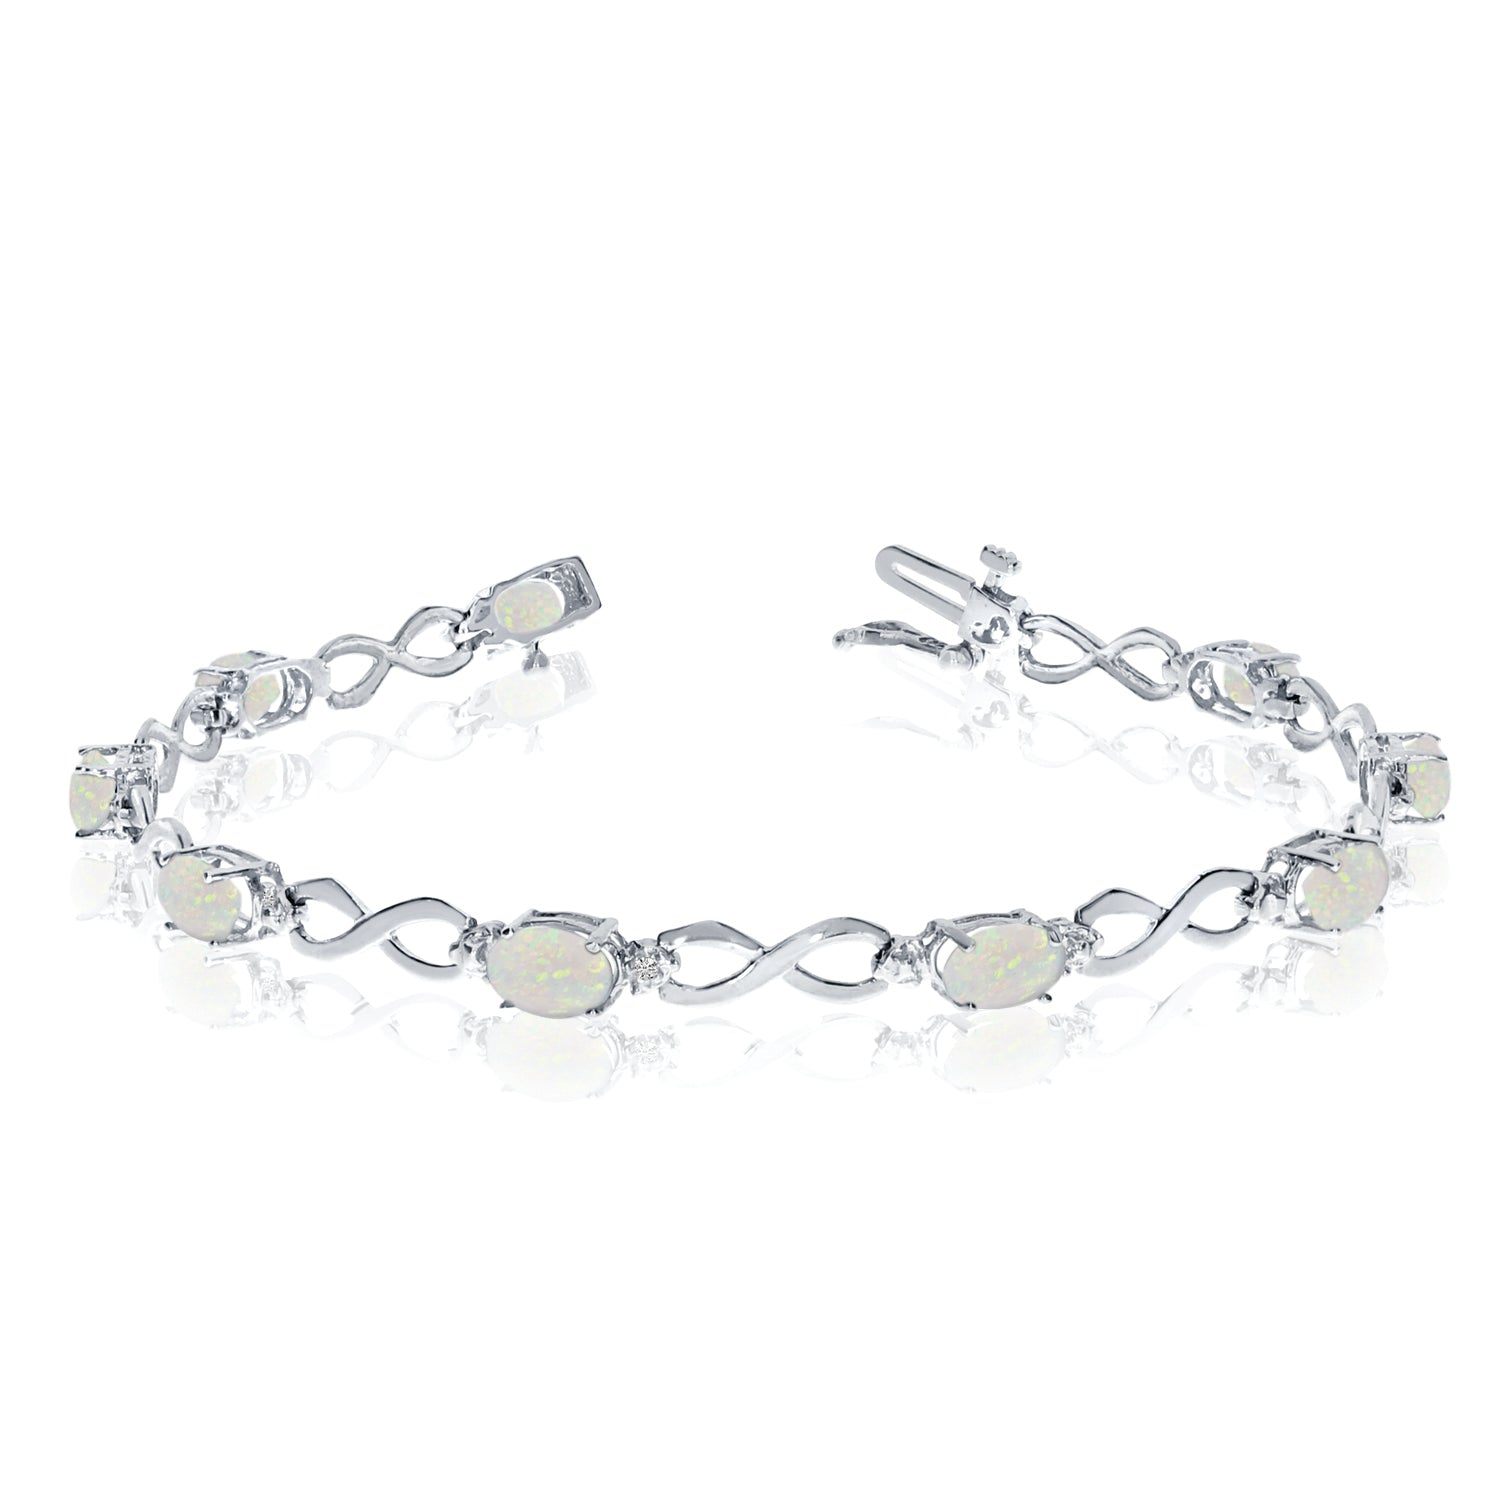 10K White Gold Oval Opal Stones And Diamonds Infinity Tennis Bracelet, 7" fine designer jewelry for men and women